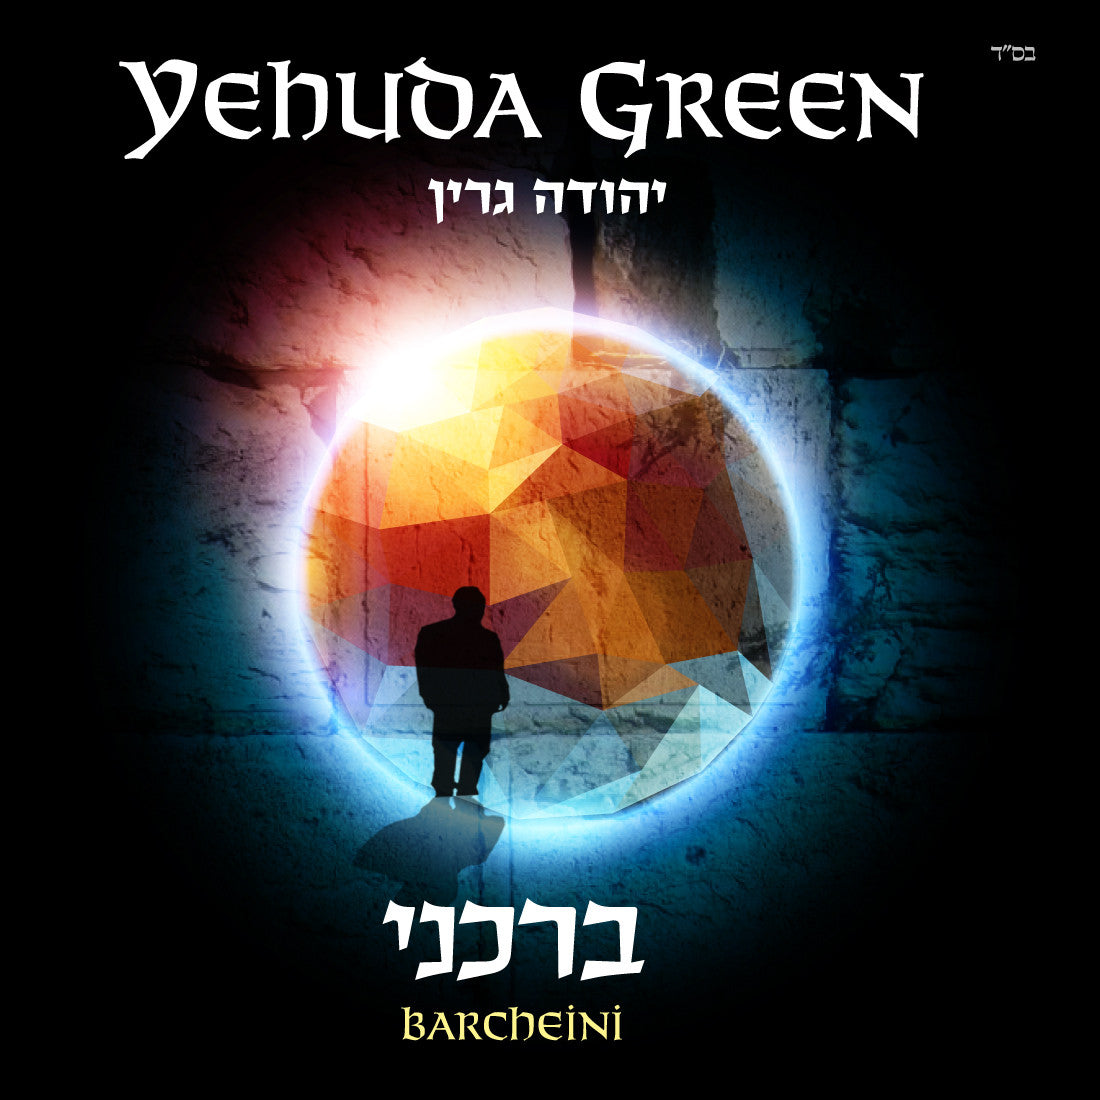 Yehuda Green - Barcheini